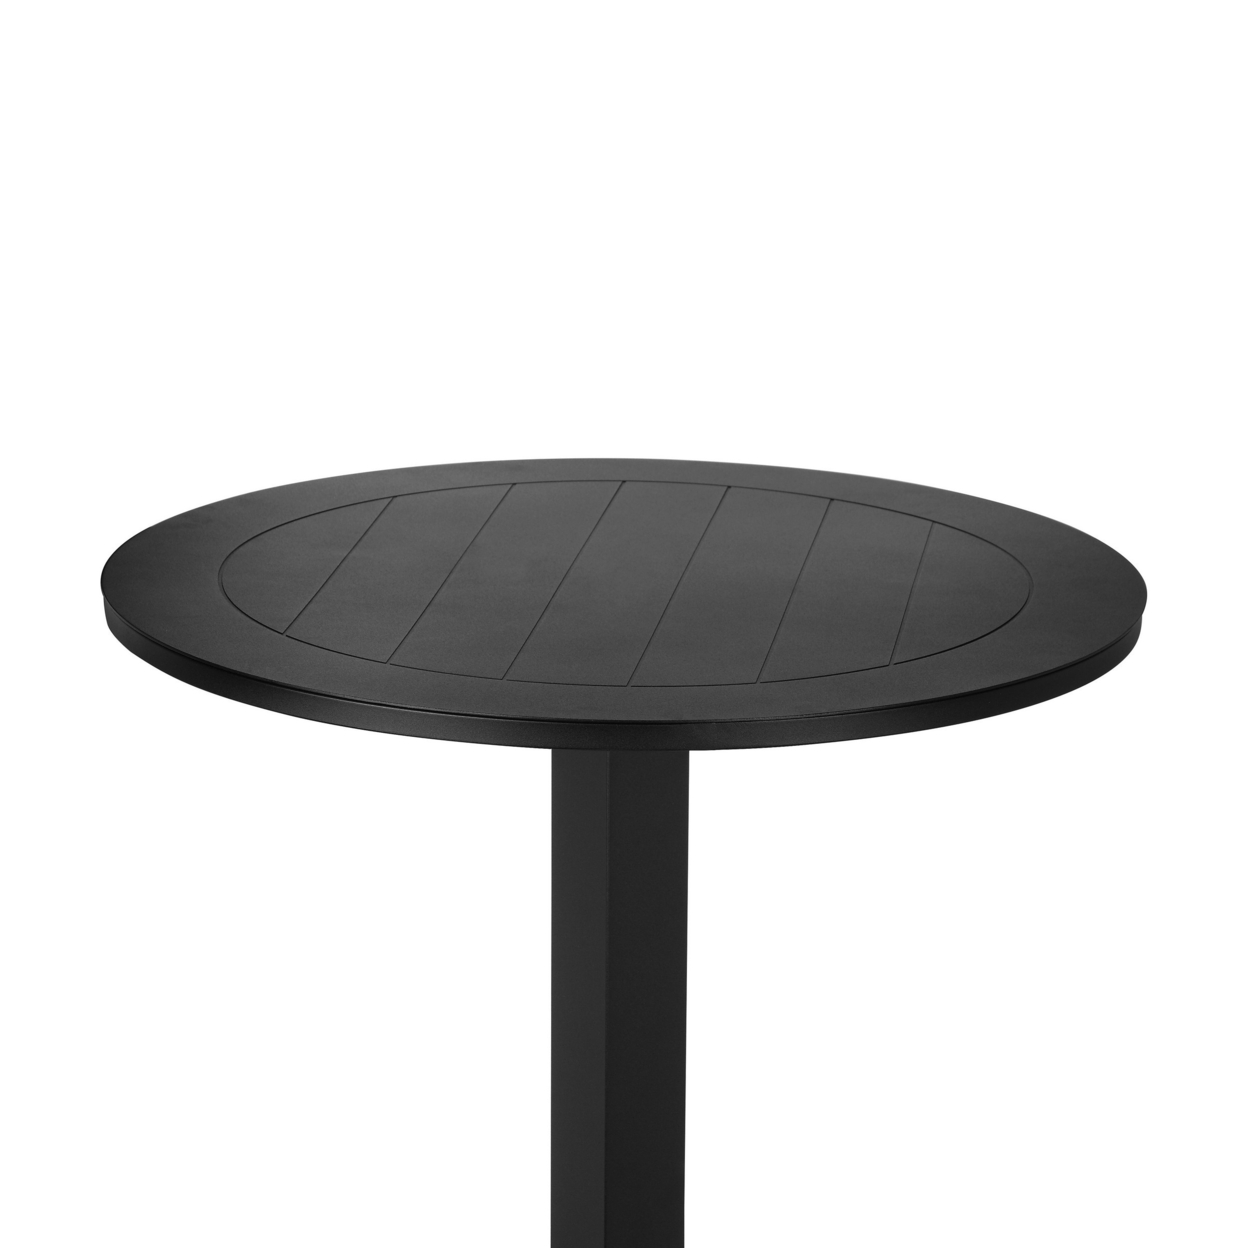 Keli 43 Inch Outdoor Bar Table, Black Aluminum Frame, Foldable Design- Saltoro Sherpi